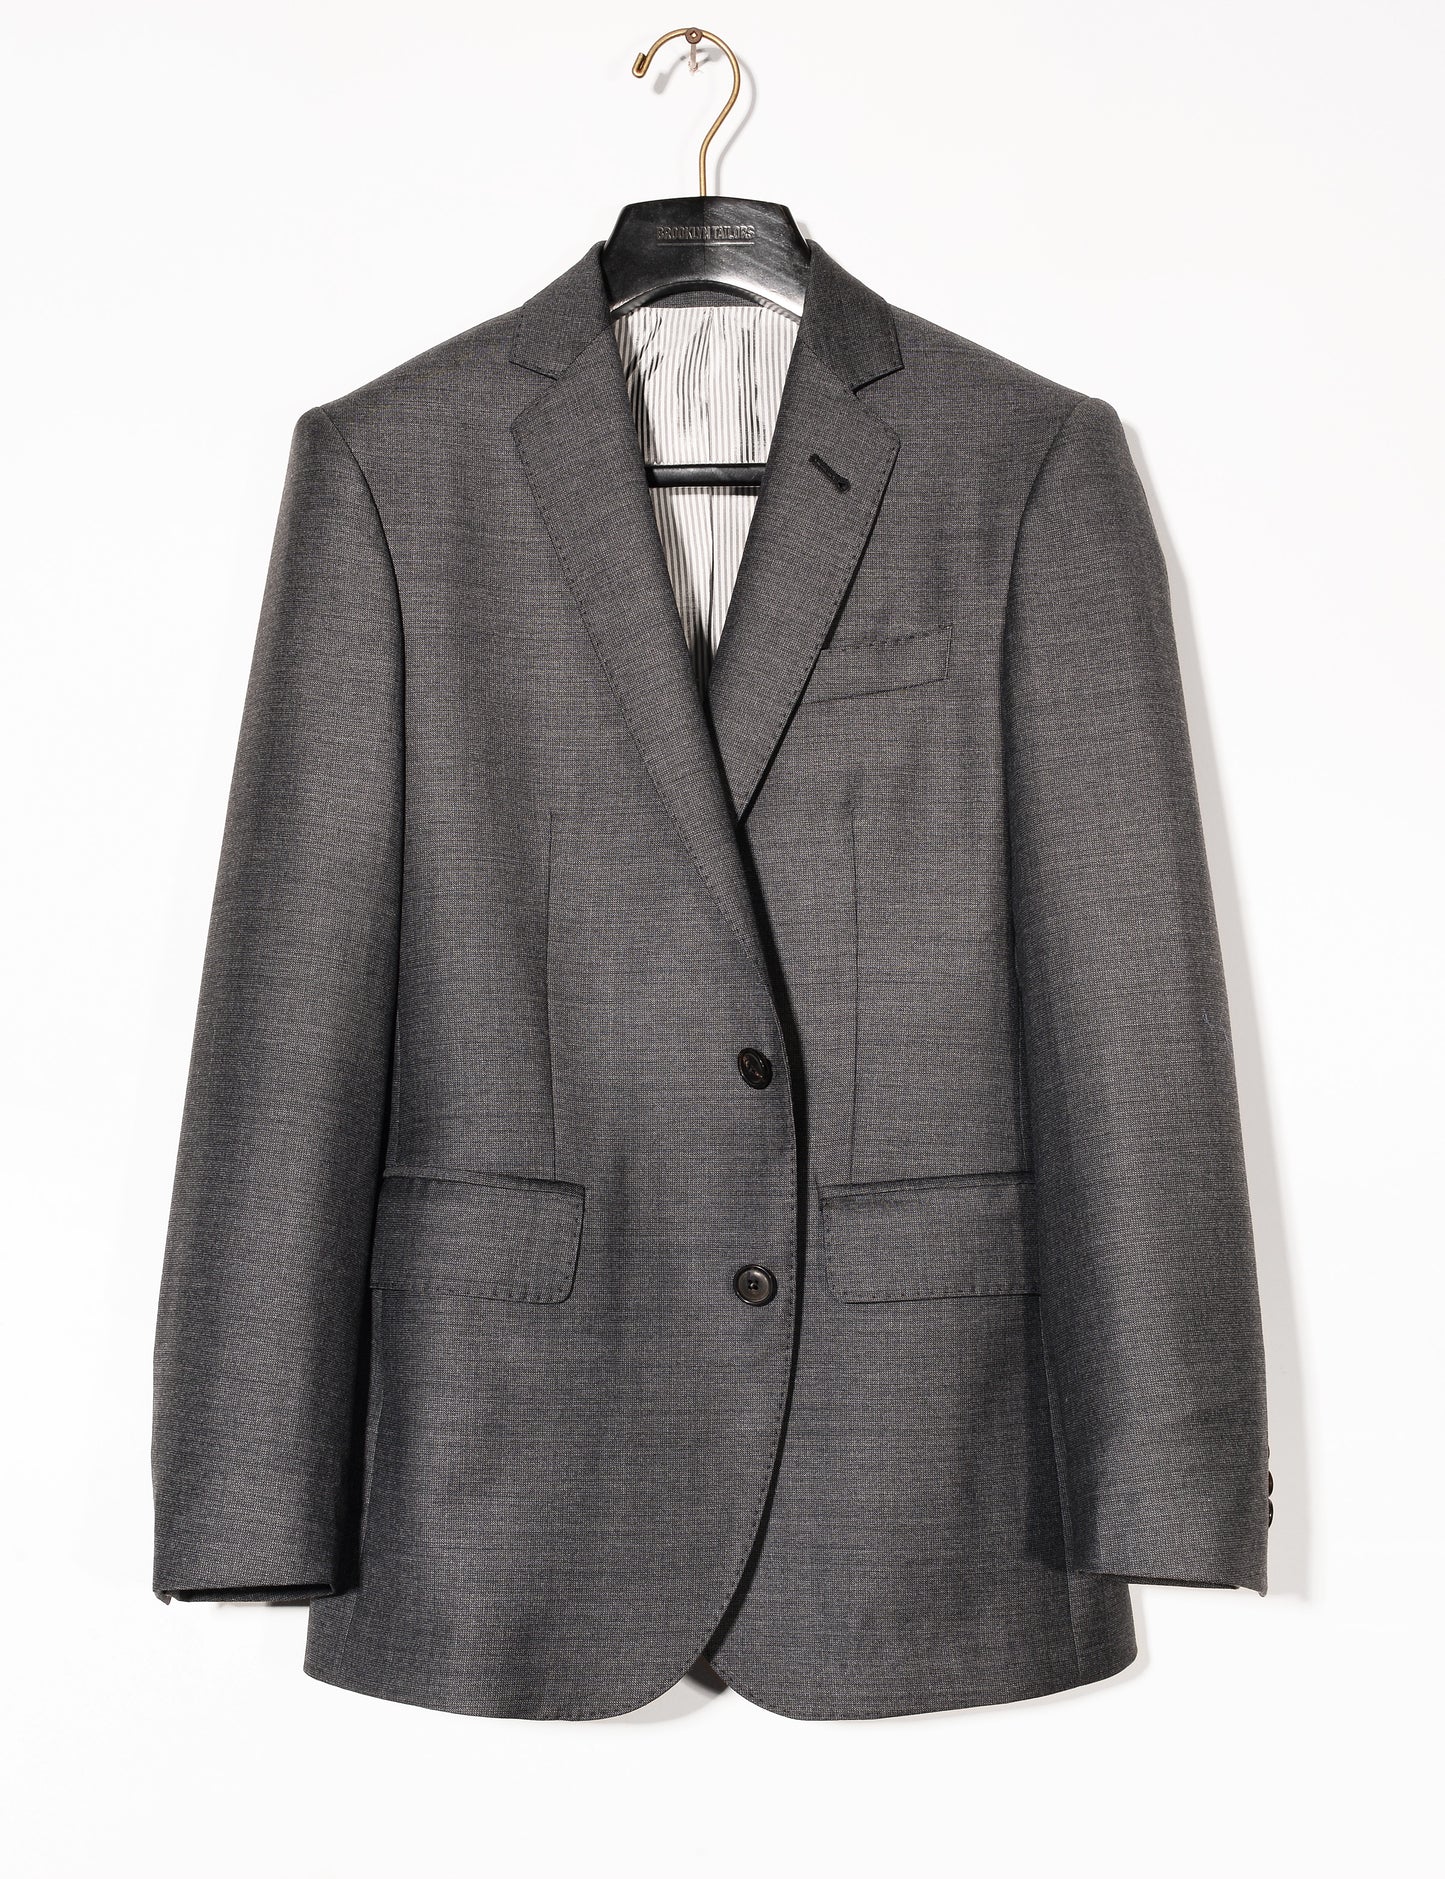 BKT50 Tailored Jacket in Wool Tickweave - Deep Gray